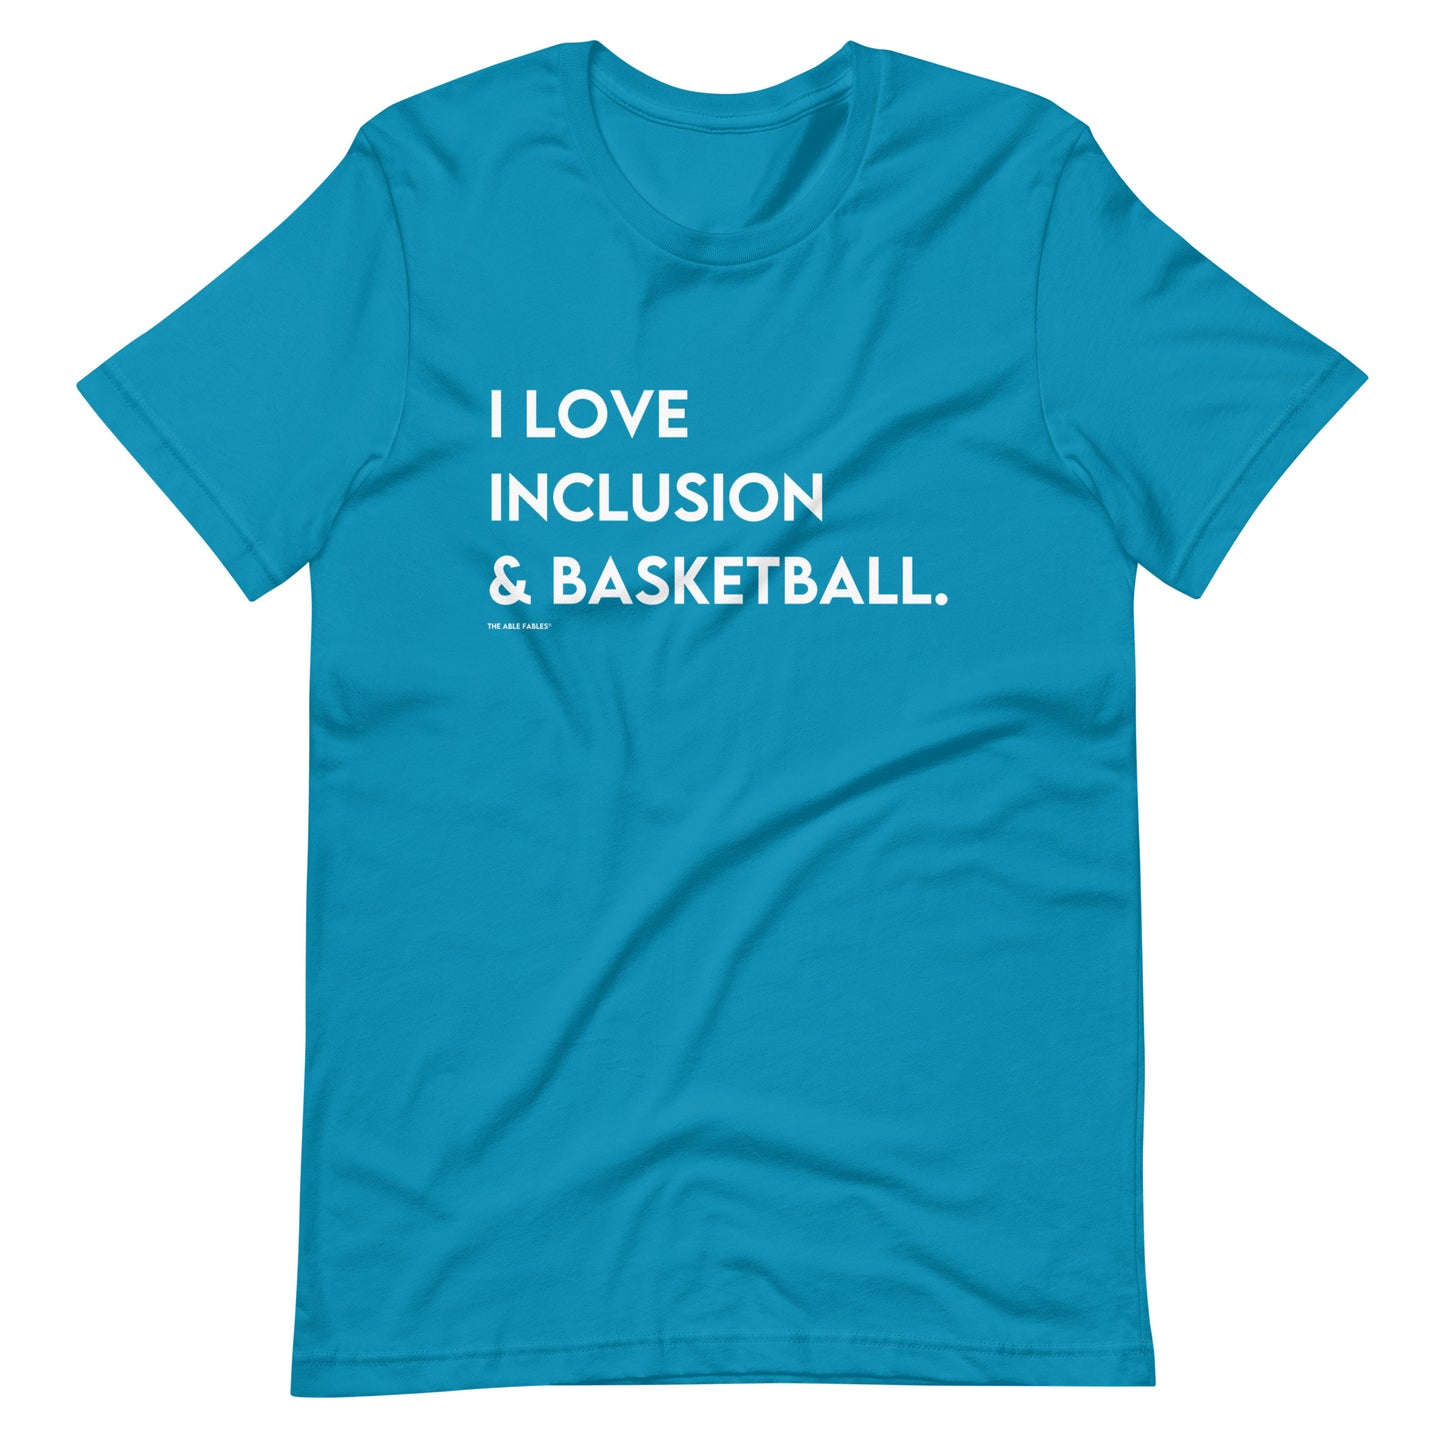 "I Love Inclusion & Basketball" Adult Unisex Tee